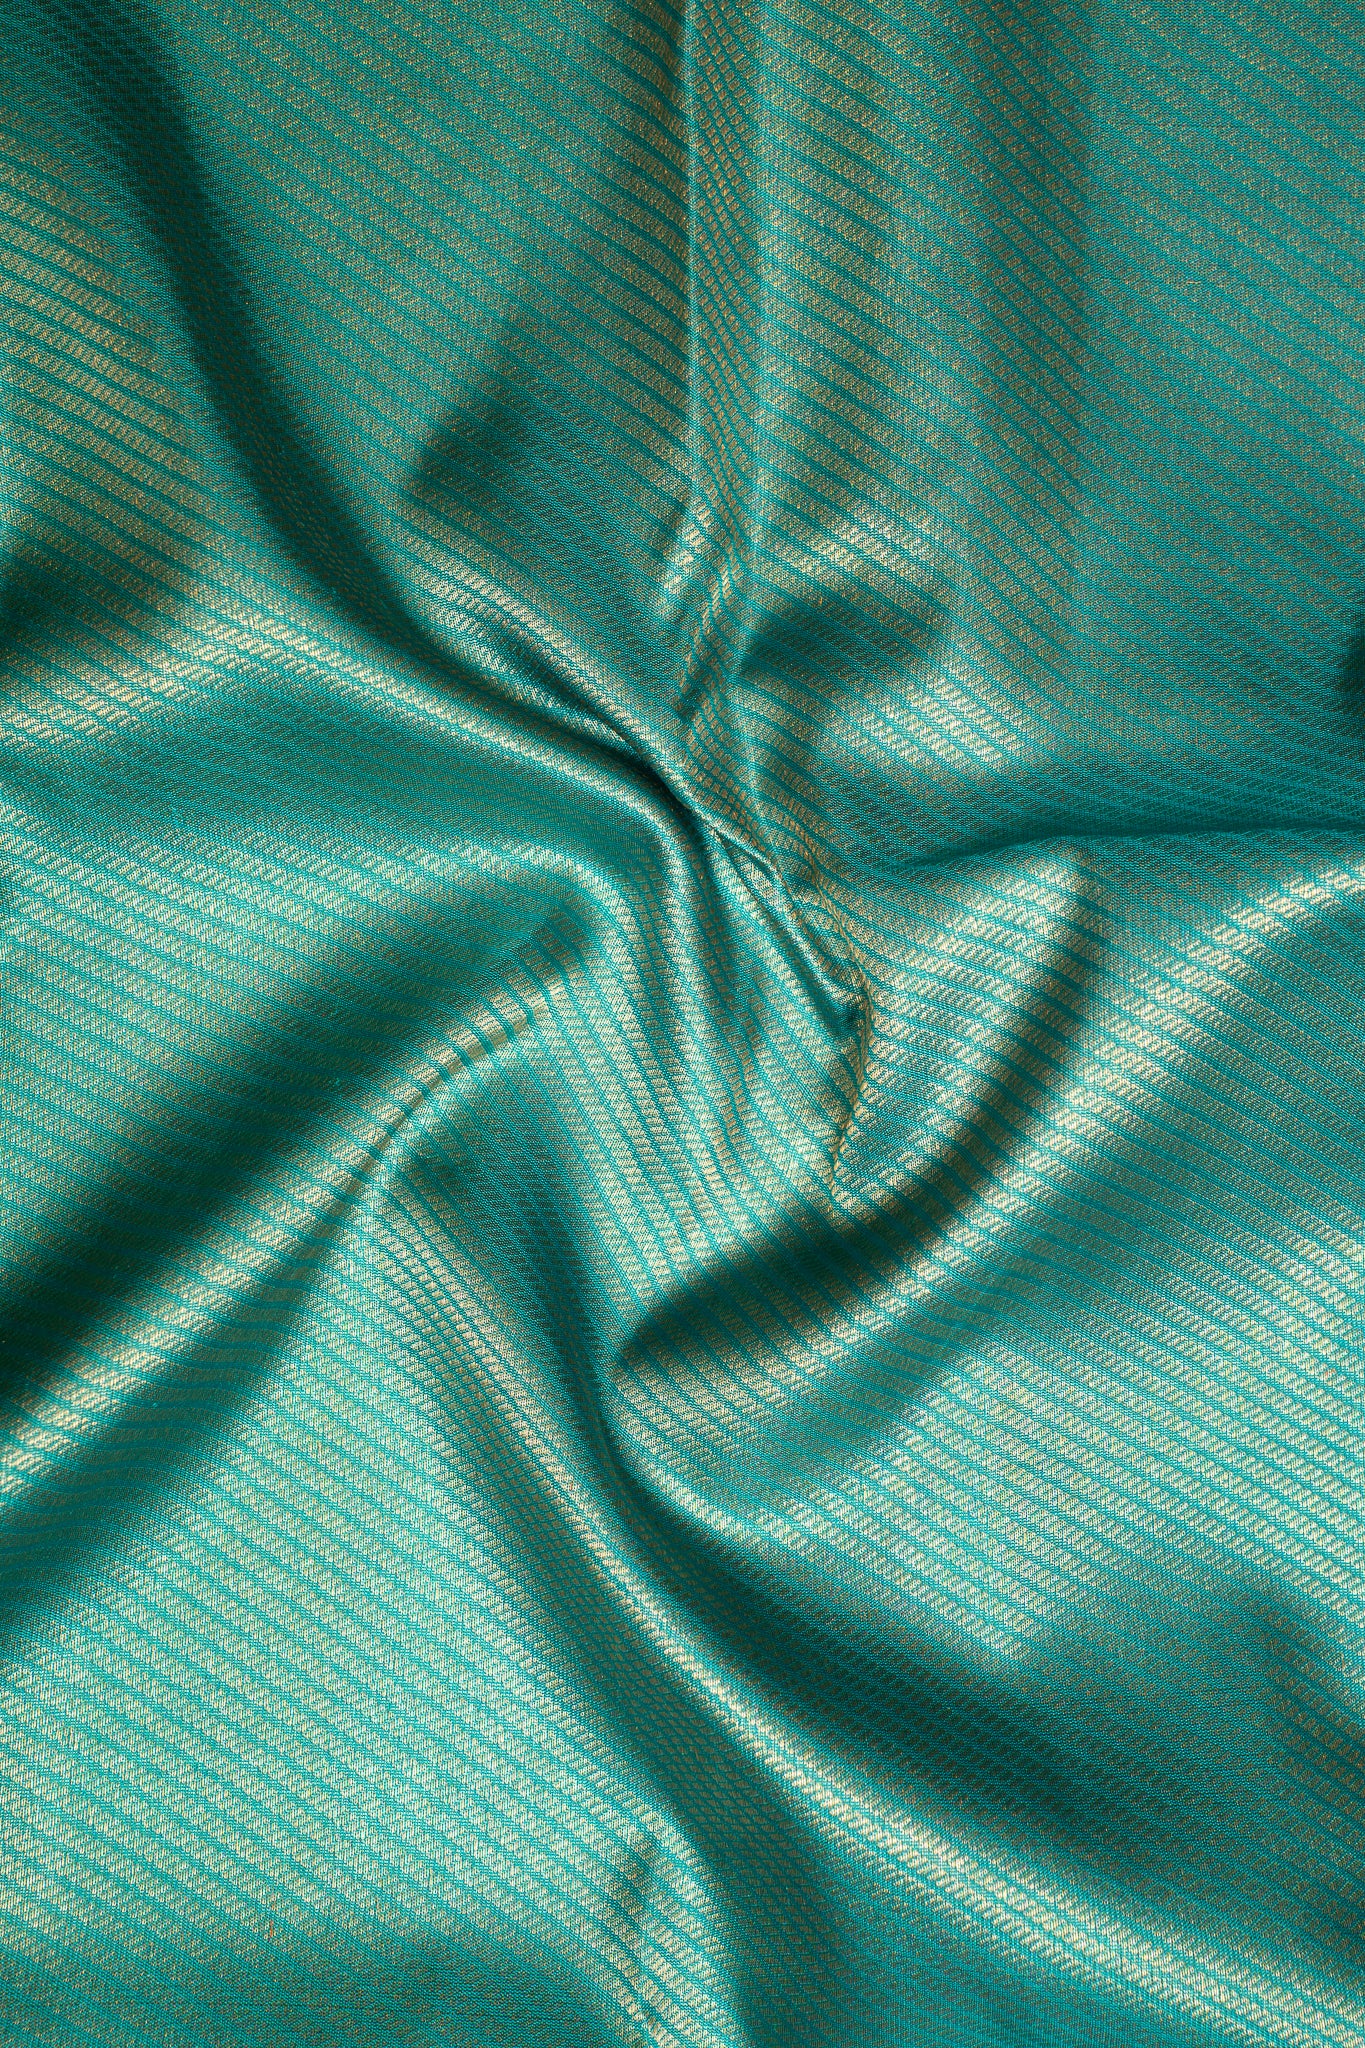 Peacock Green and Magenta Brocade Pure Zari Kanchipuram Silk Saree - Clio Silks